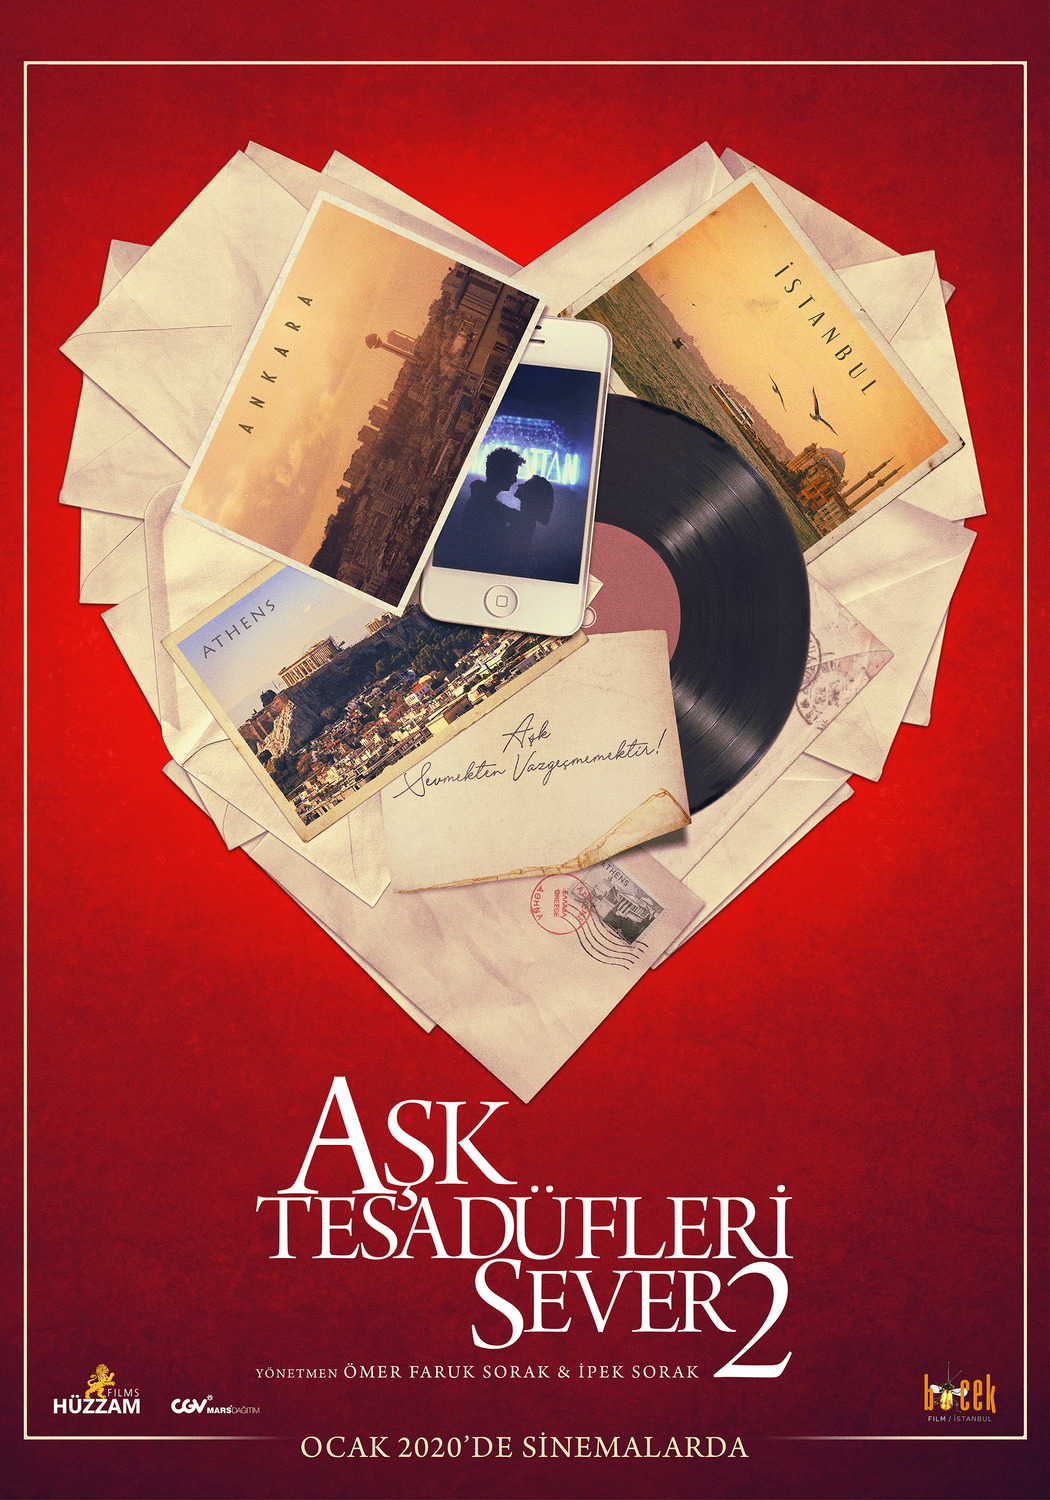 Extra Large Movie Poster Image for Ask Tesadüfleri Sever 2 (#1 of 2)